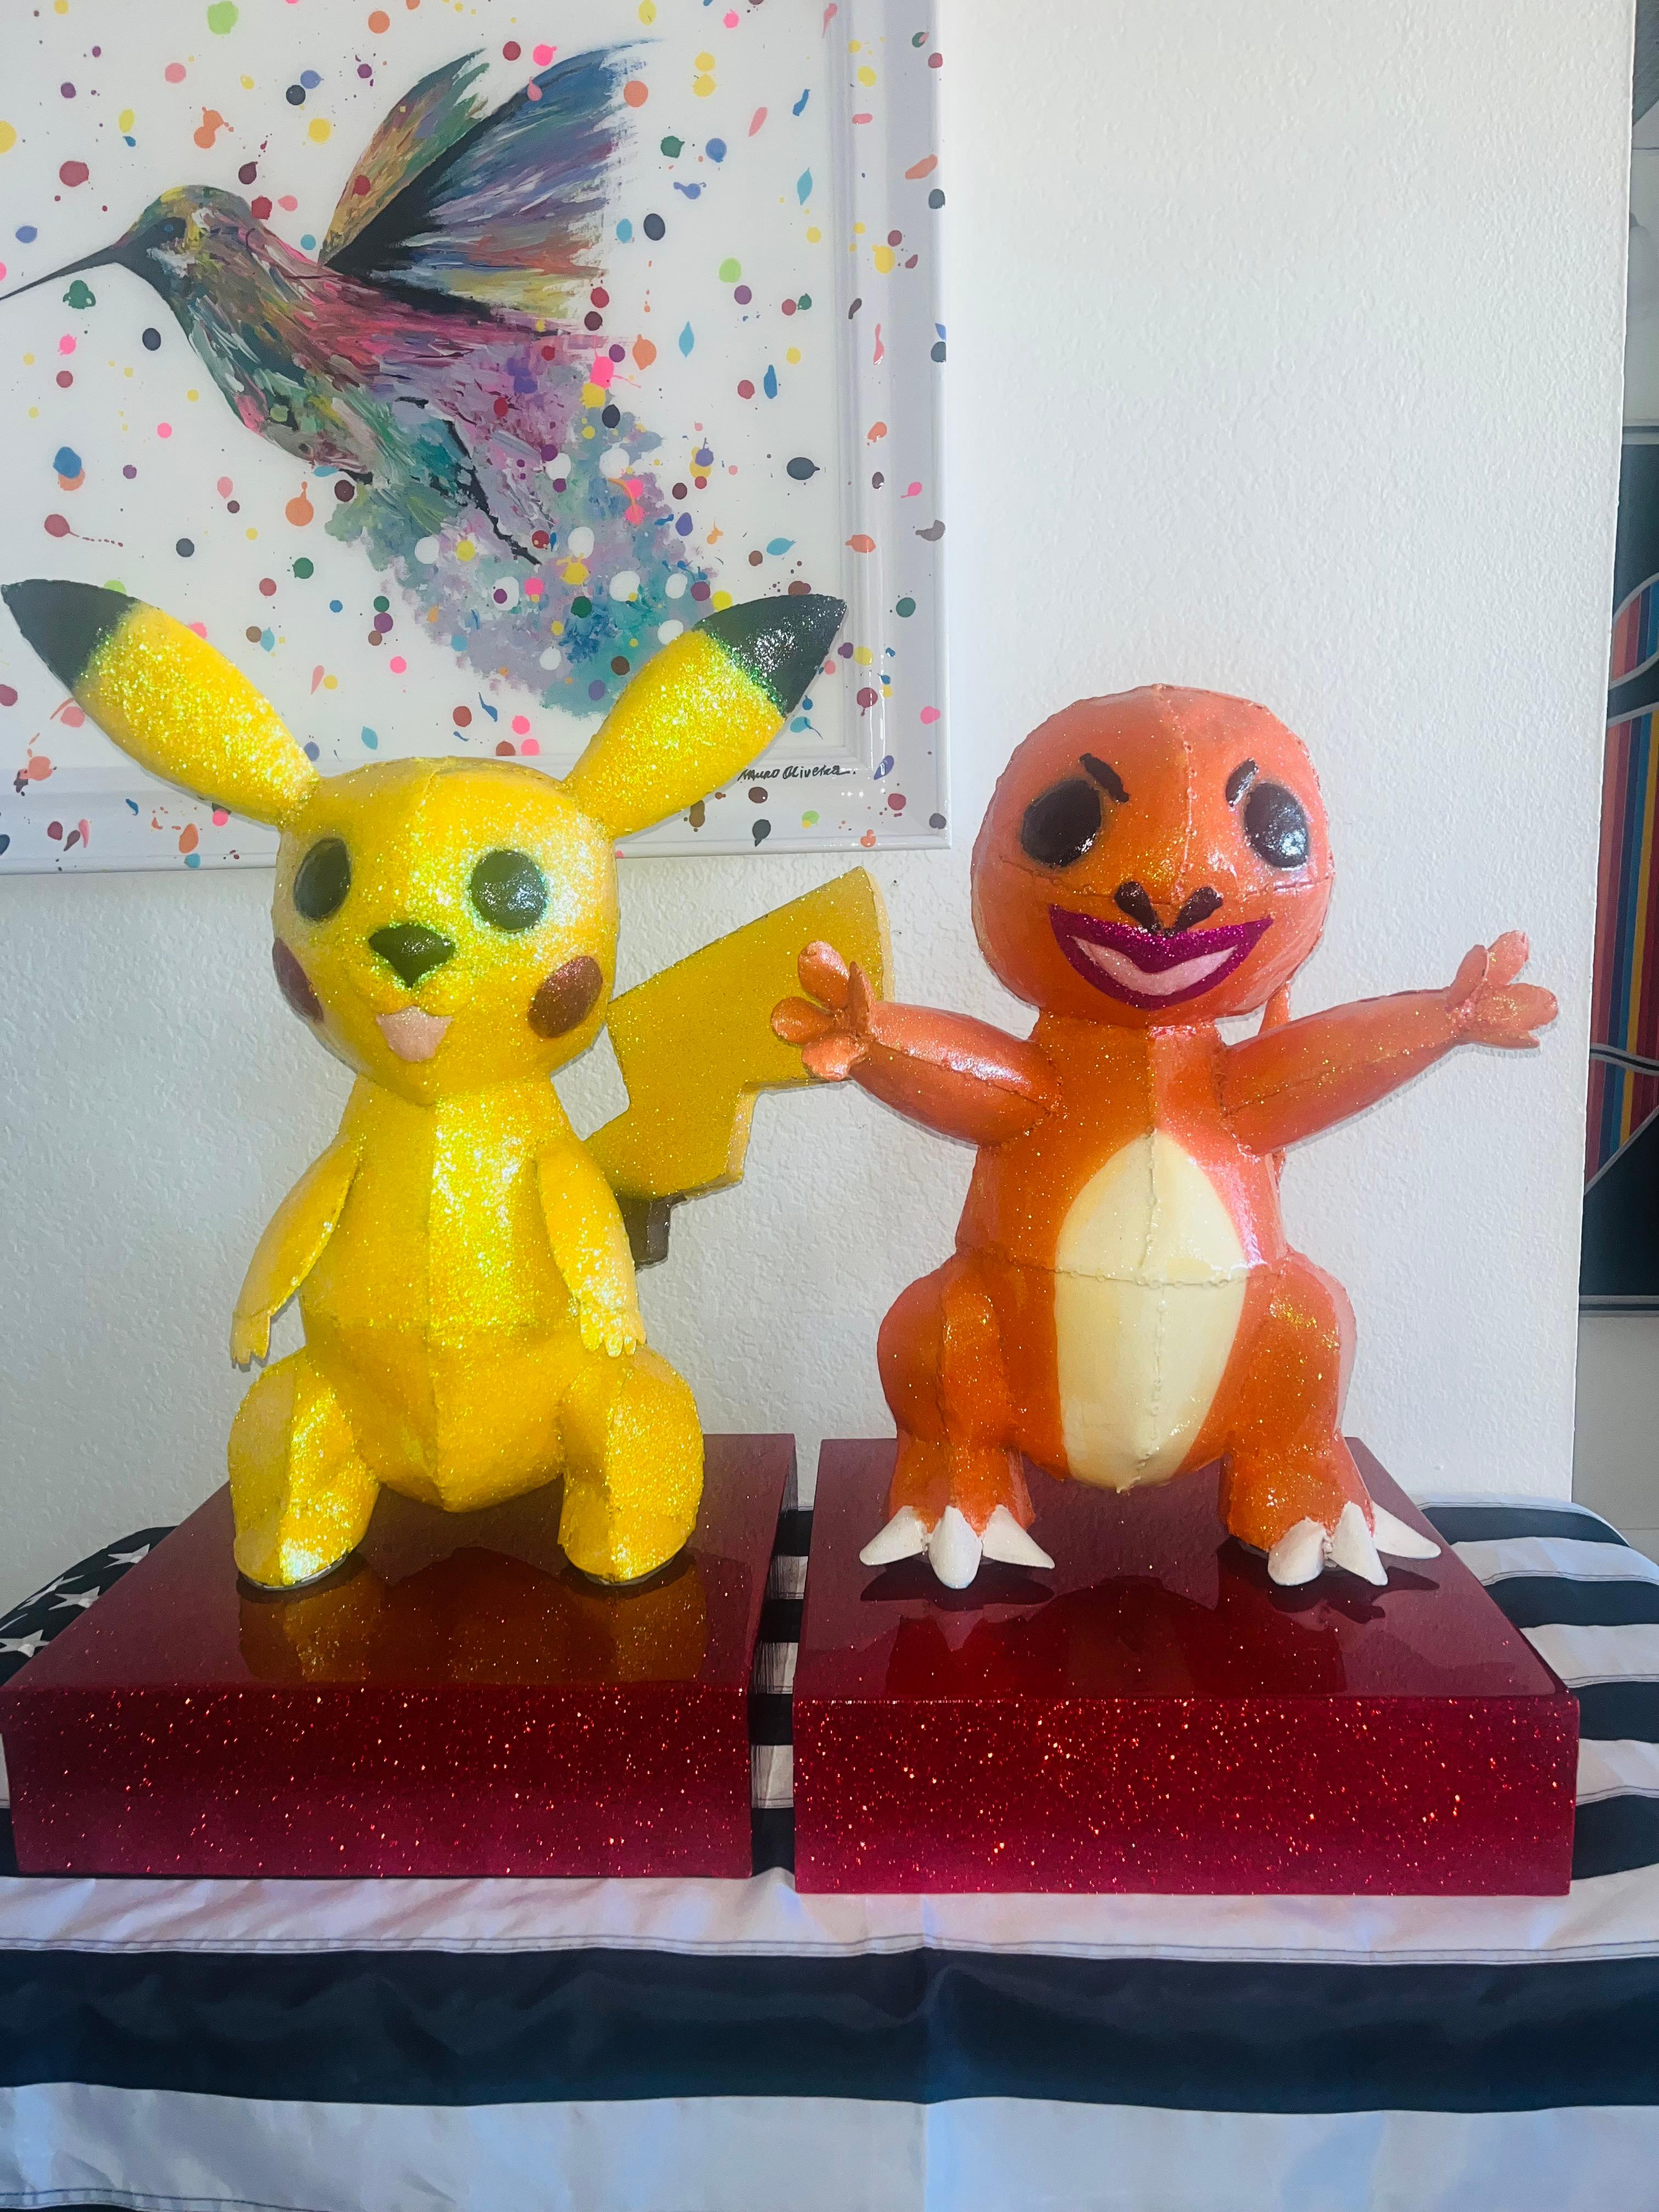 Pikachu & Charmander - 2 Of A kind Metal Pokemon Sculptures